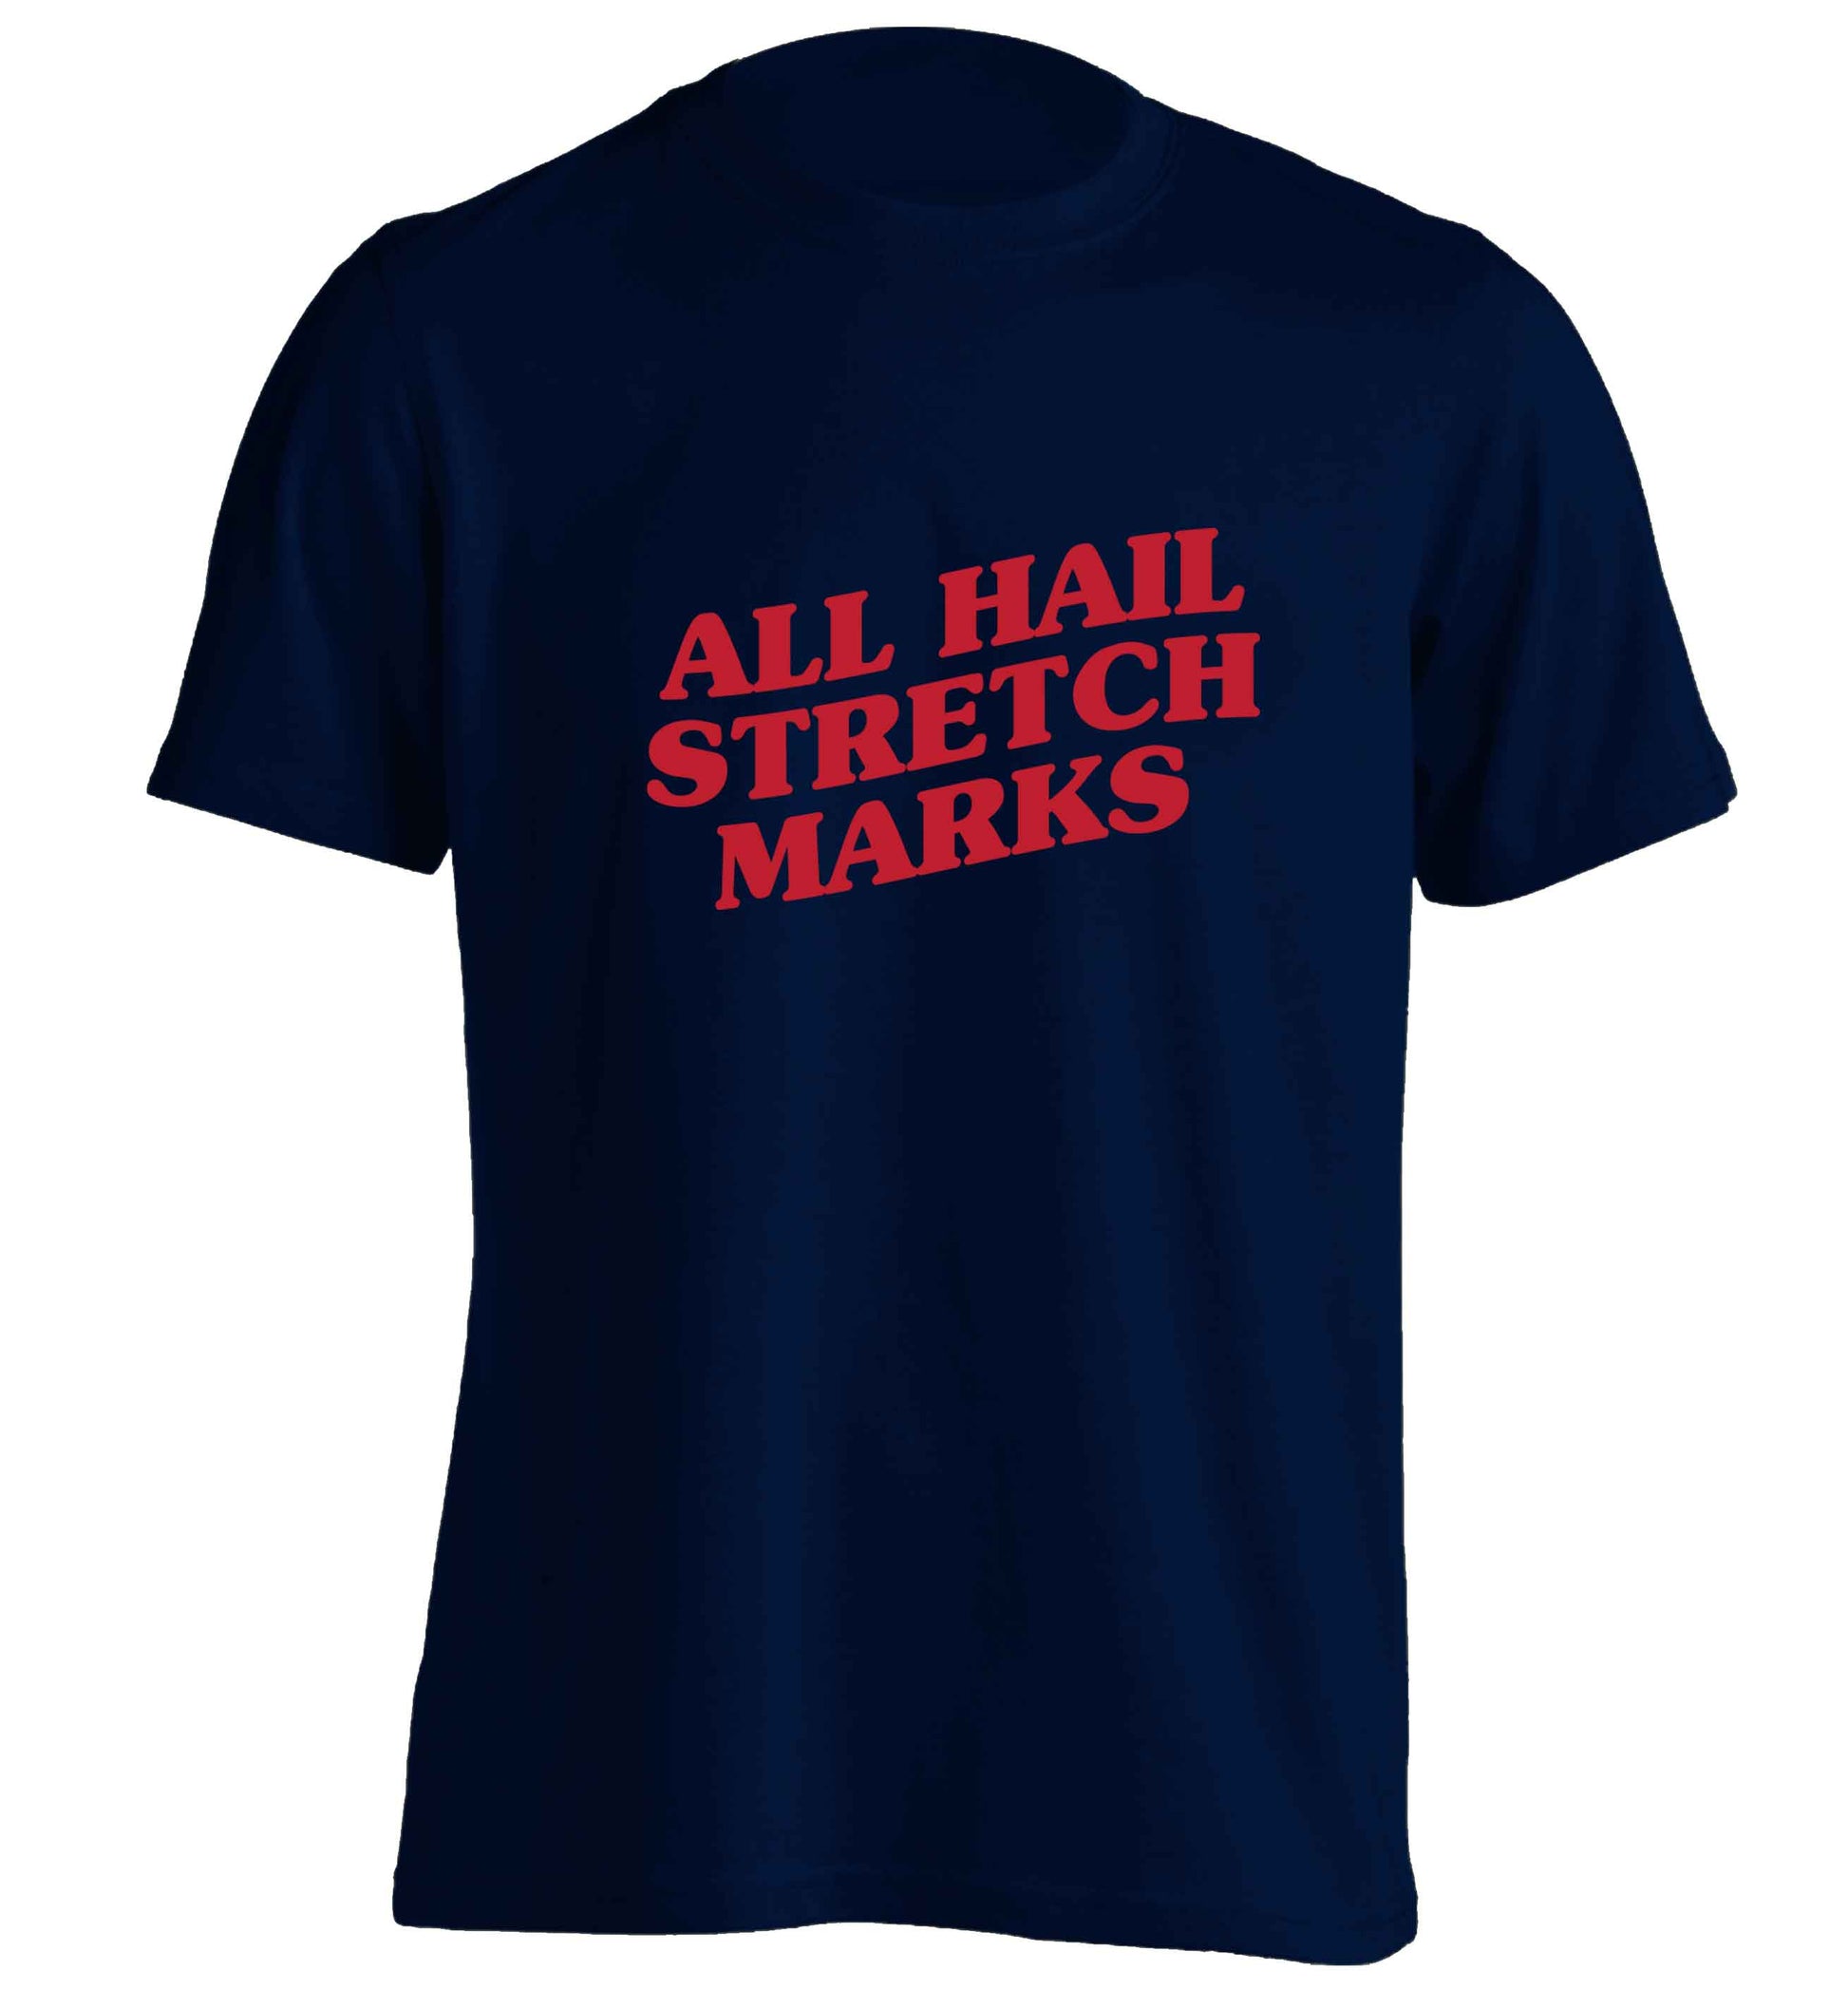 All hail stretch marks adults unisex navy Tshirt 2XL